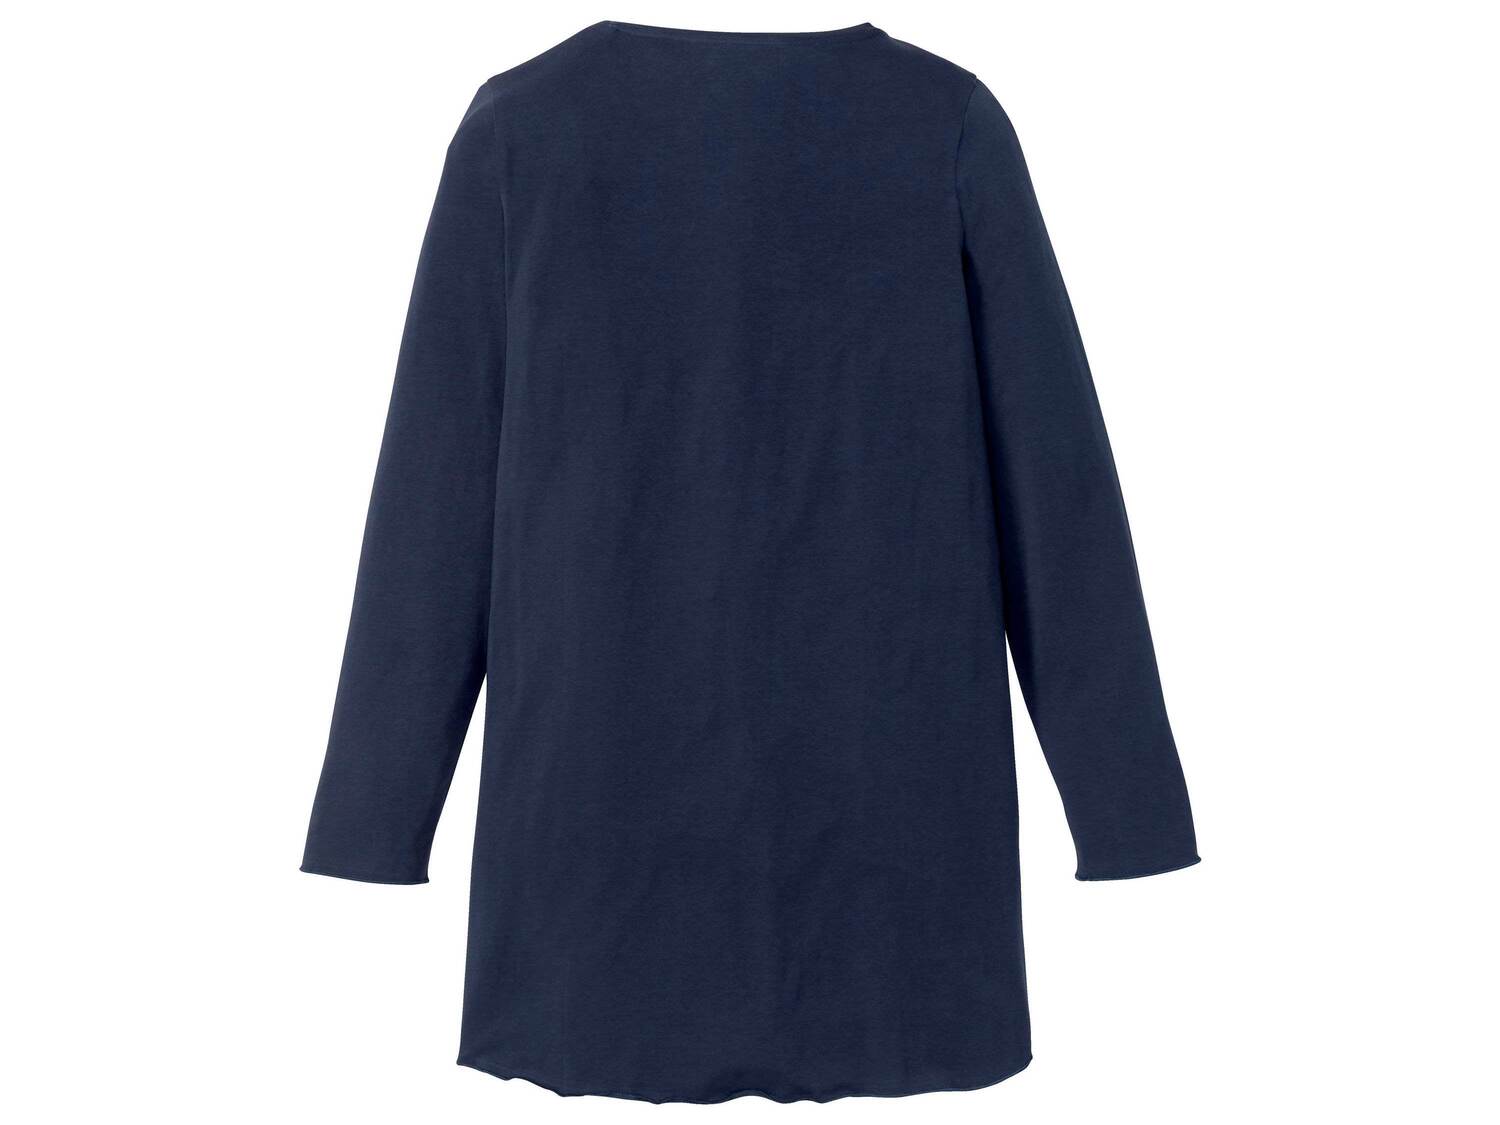 Koszula nocna damska Esmara Lingerie, cena 24,99 PLN 
- rozmiary: S-L
- 95% bawełna, ...